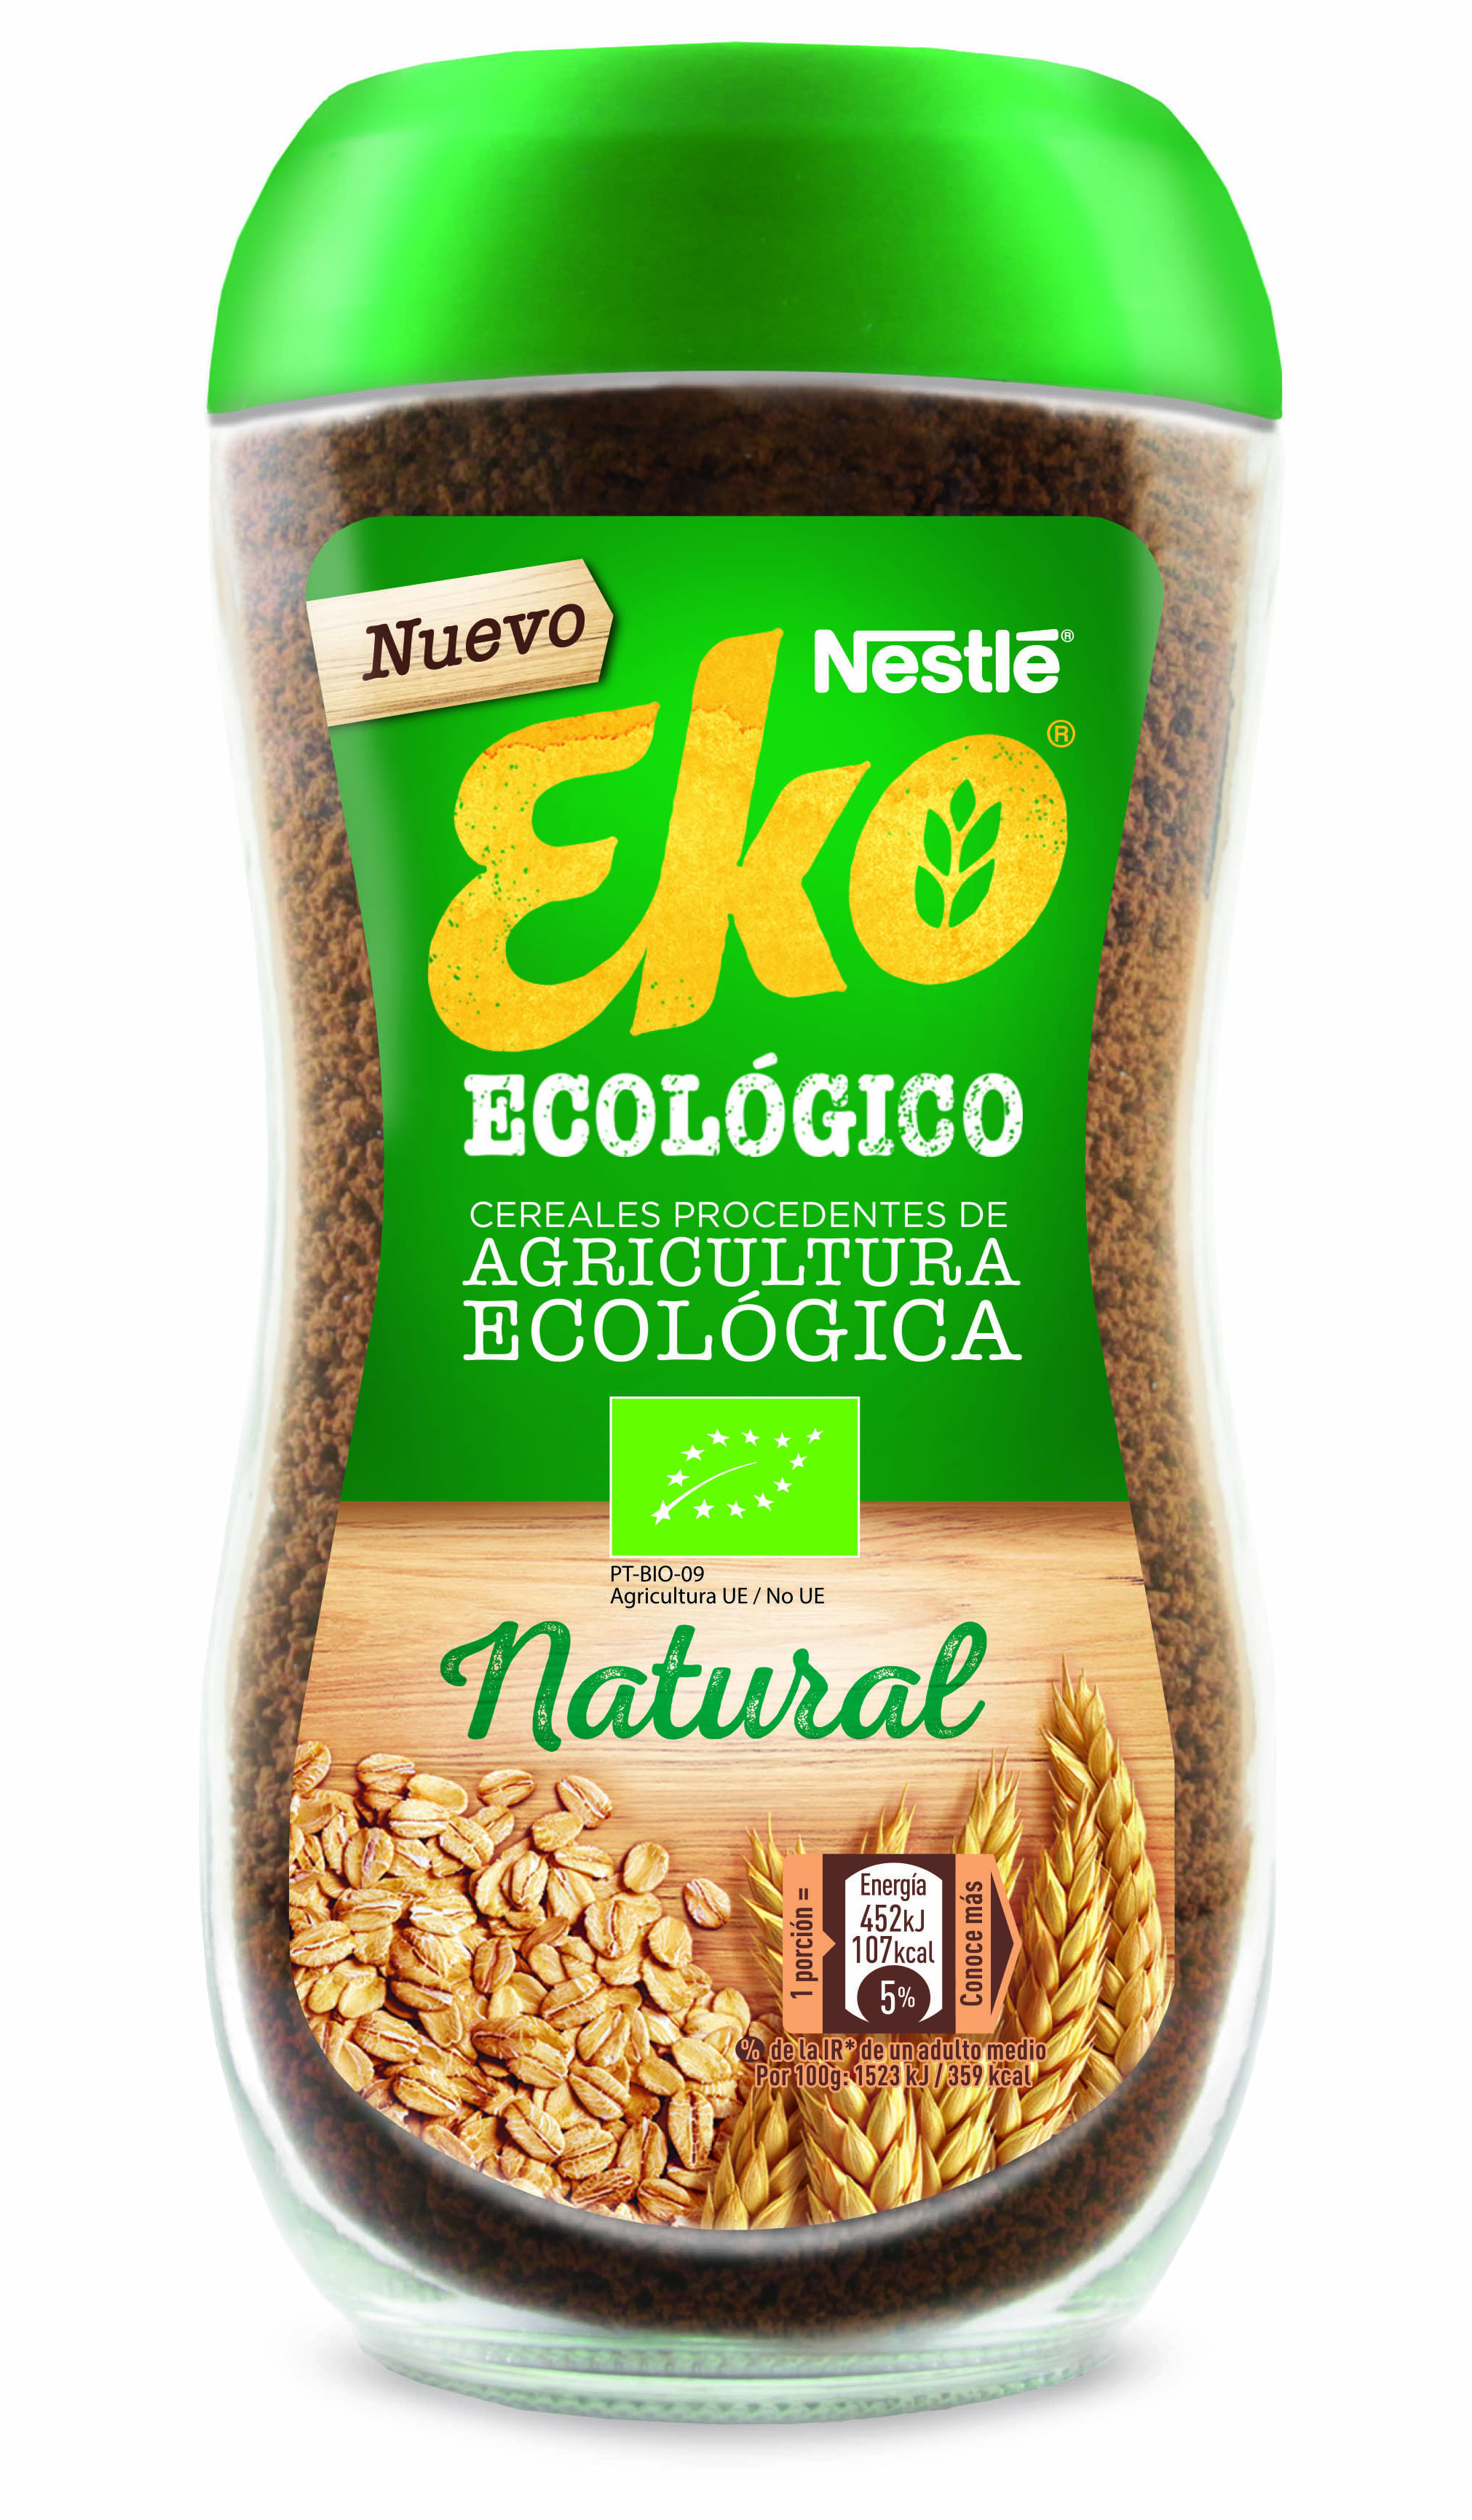 EKO-Ecologico-Natural241018